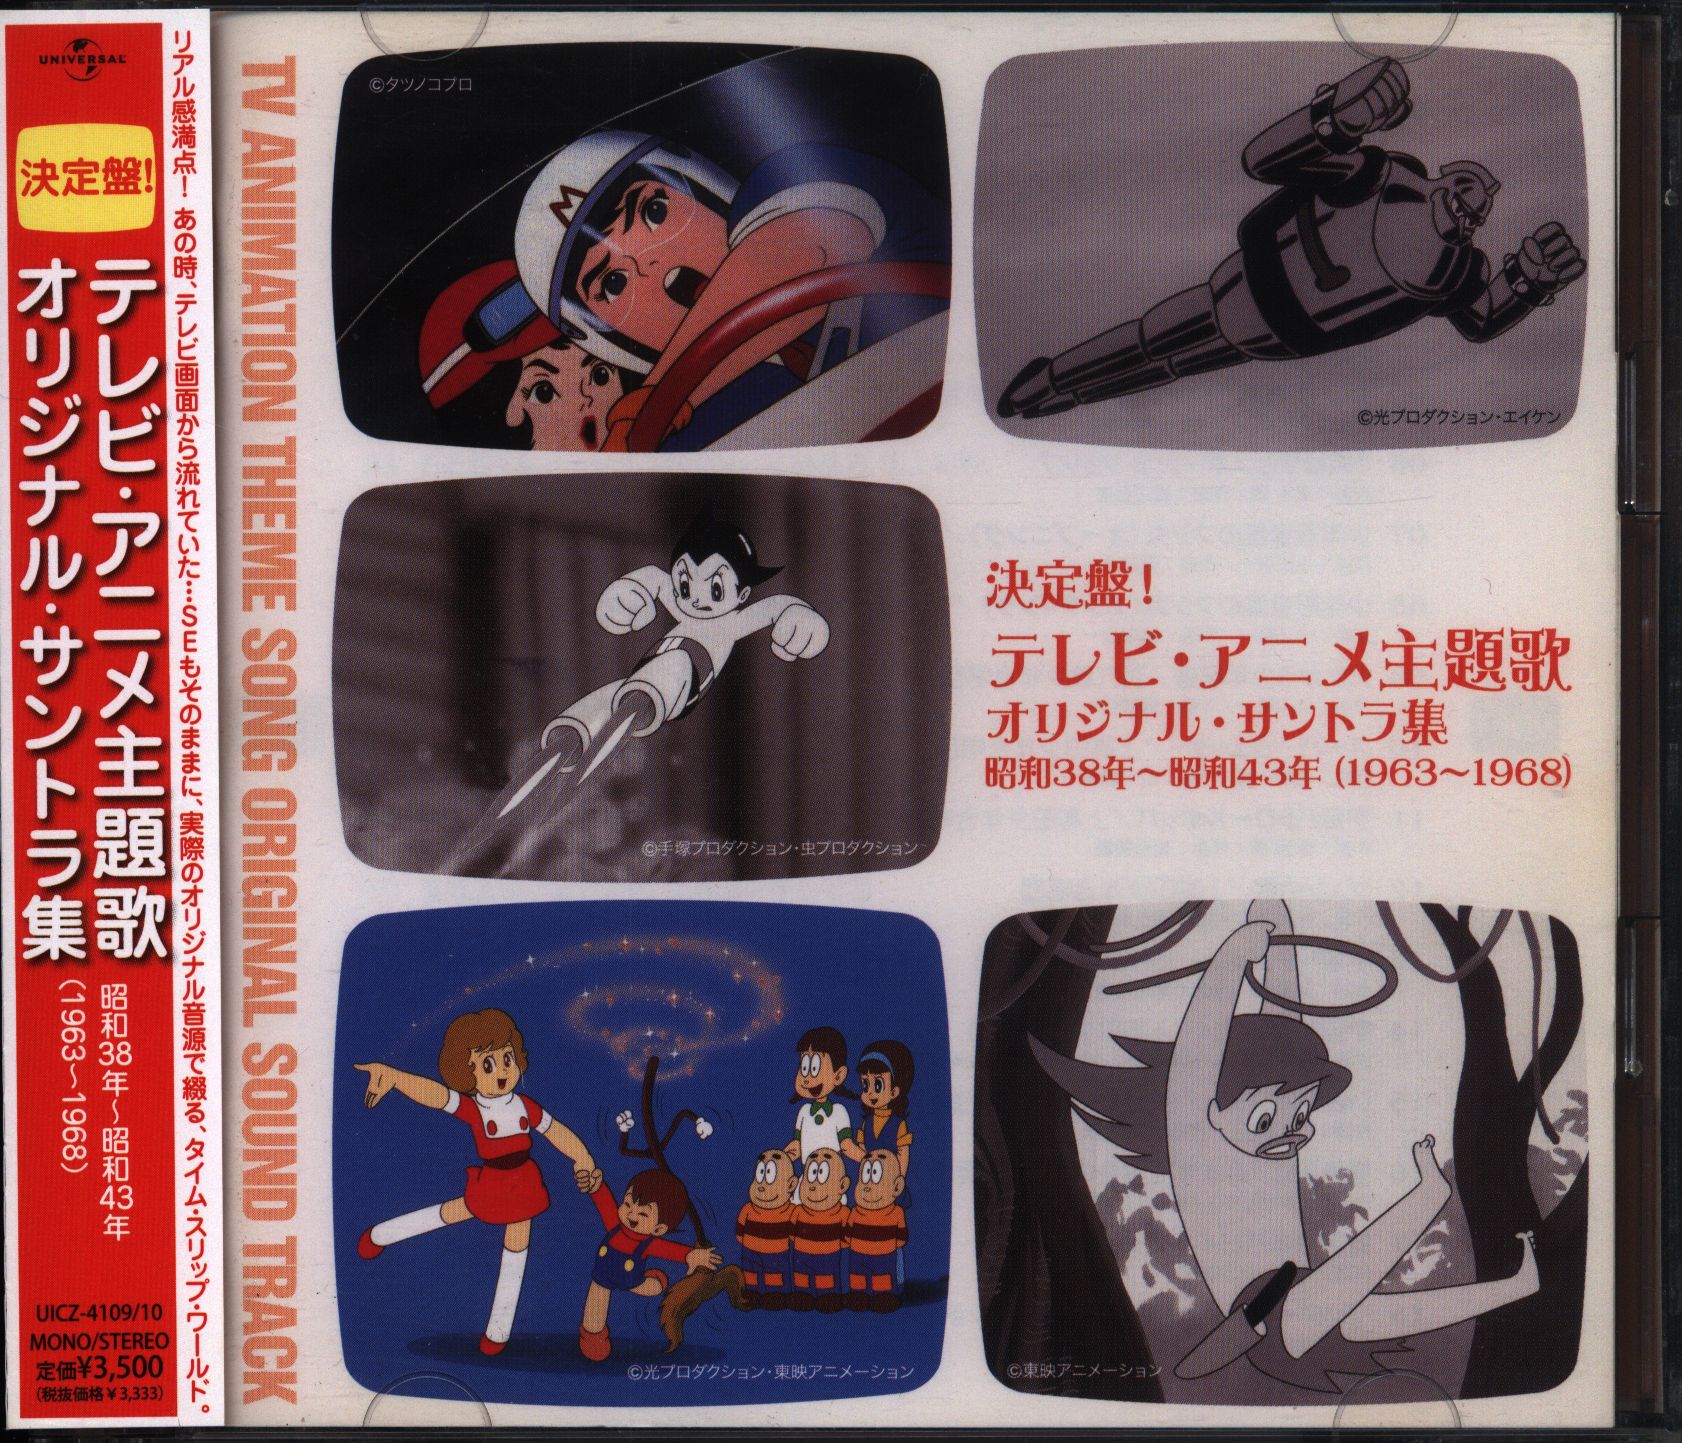 OST JAPANESE ANIME TV THEME 80 TRACK 4LP BOX BOOKLET COLUMBIA 1963-1976  VINYL | eBay